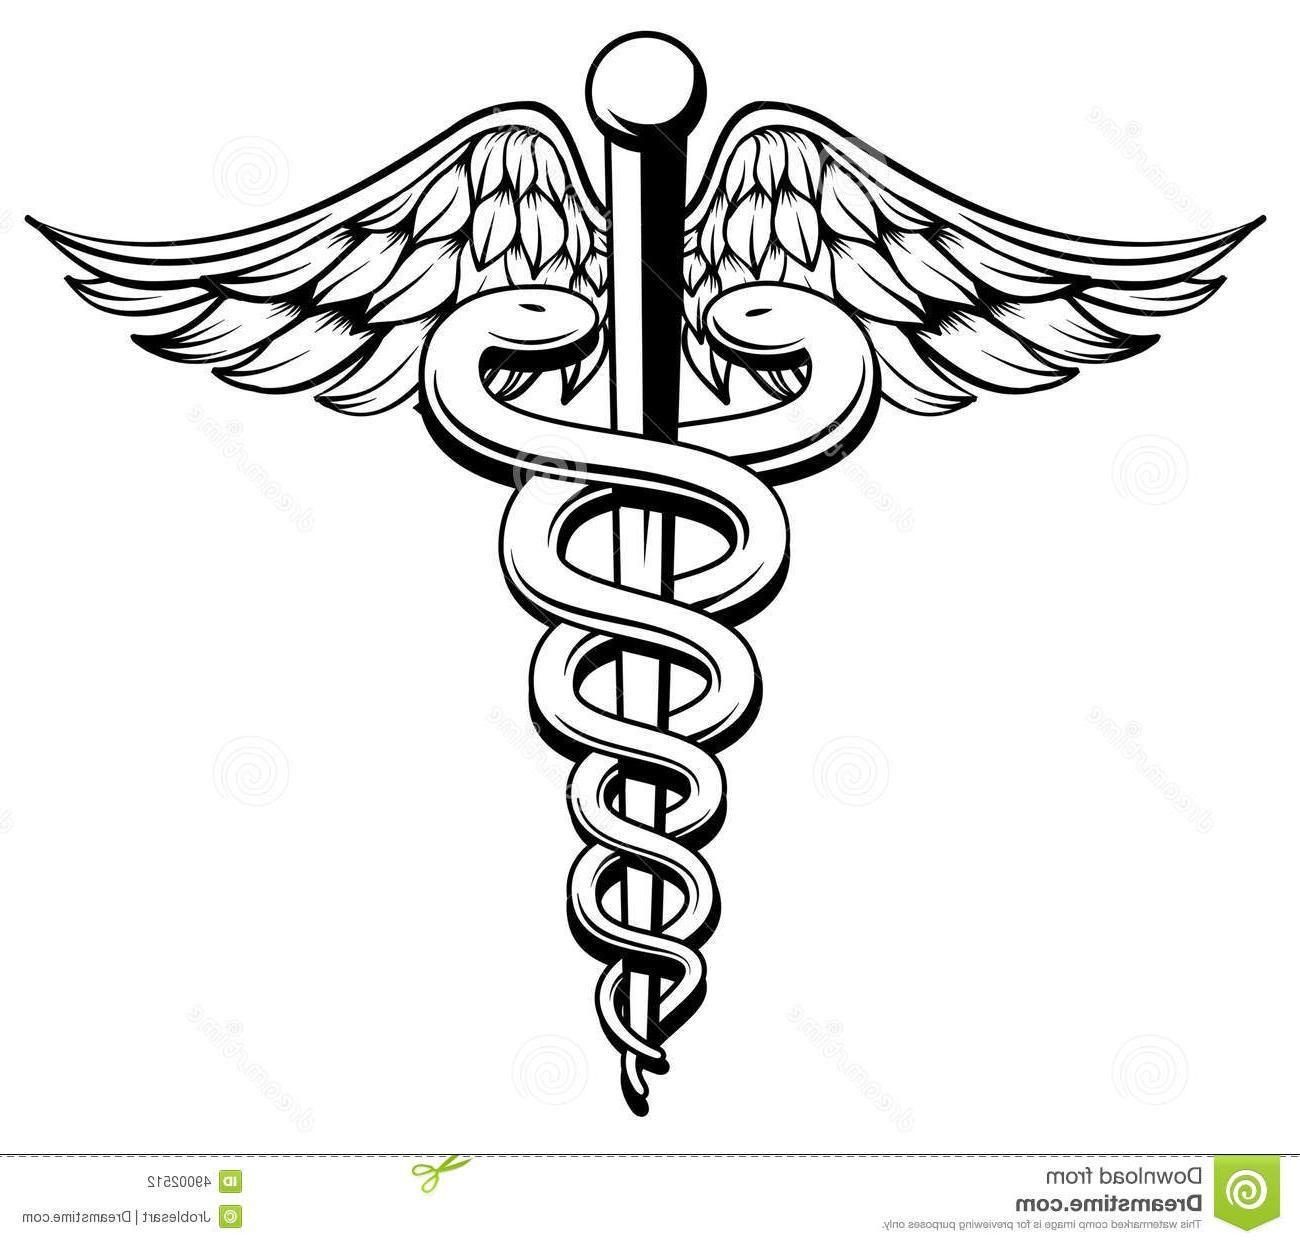 Medical Cross Snake Logo - Unique Caduceus Medical Symbol Snakes Wings Drawing